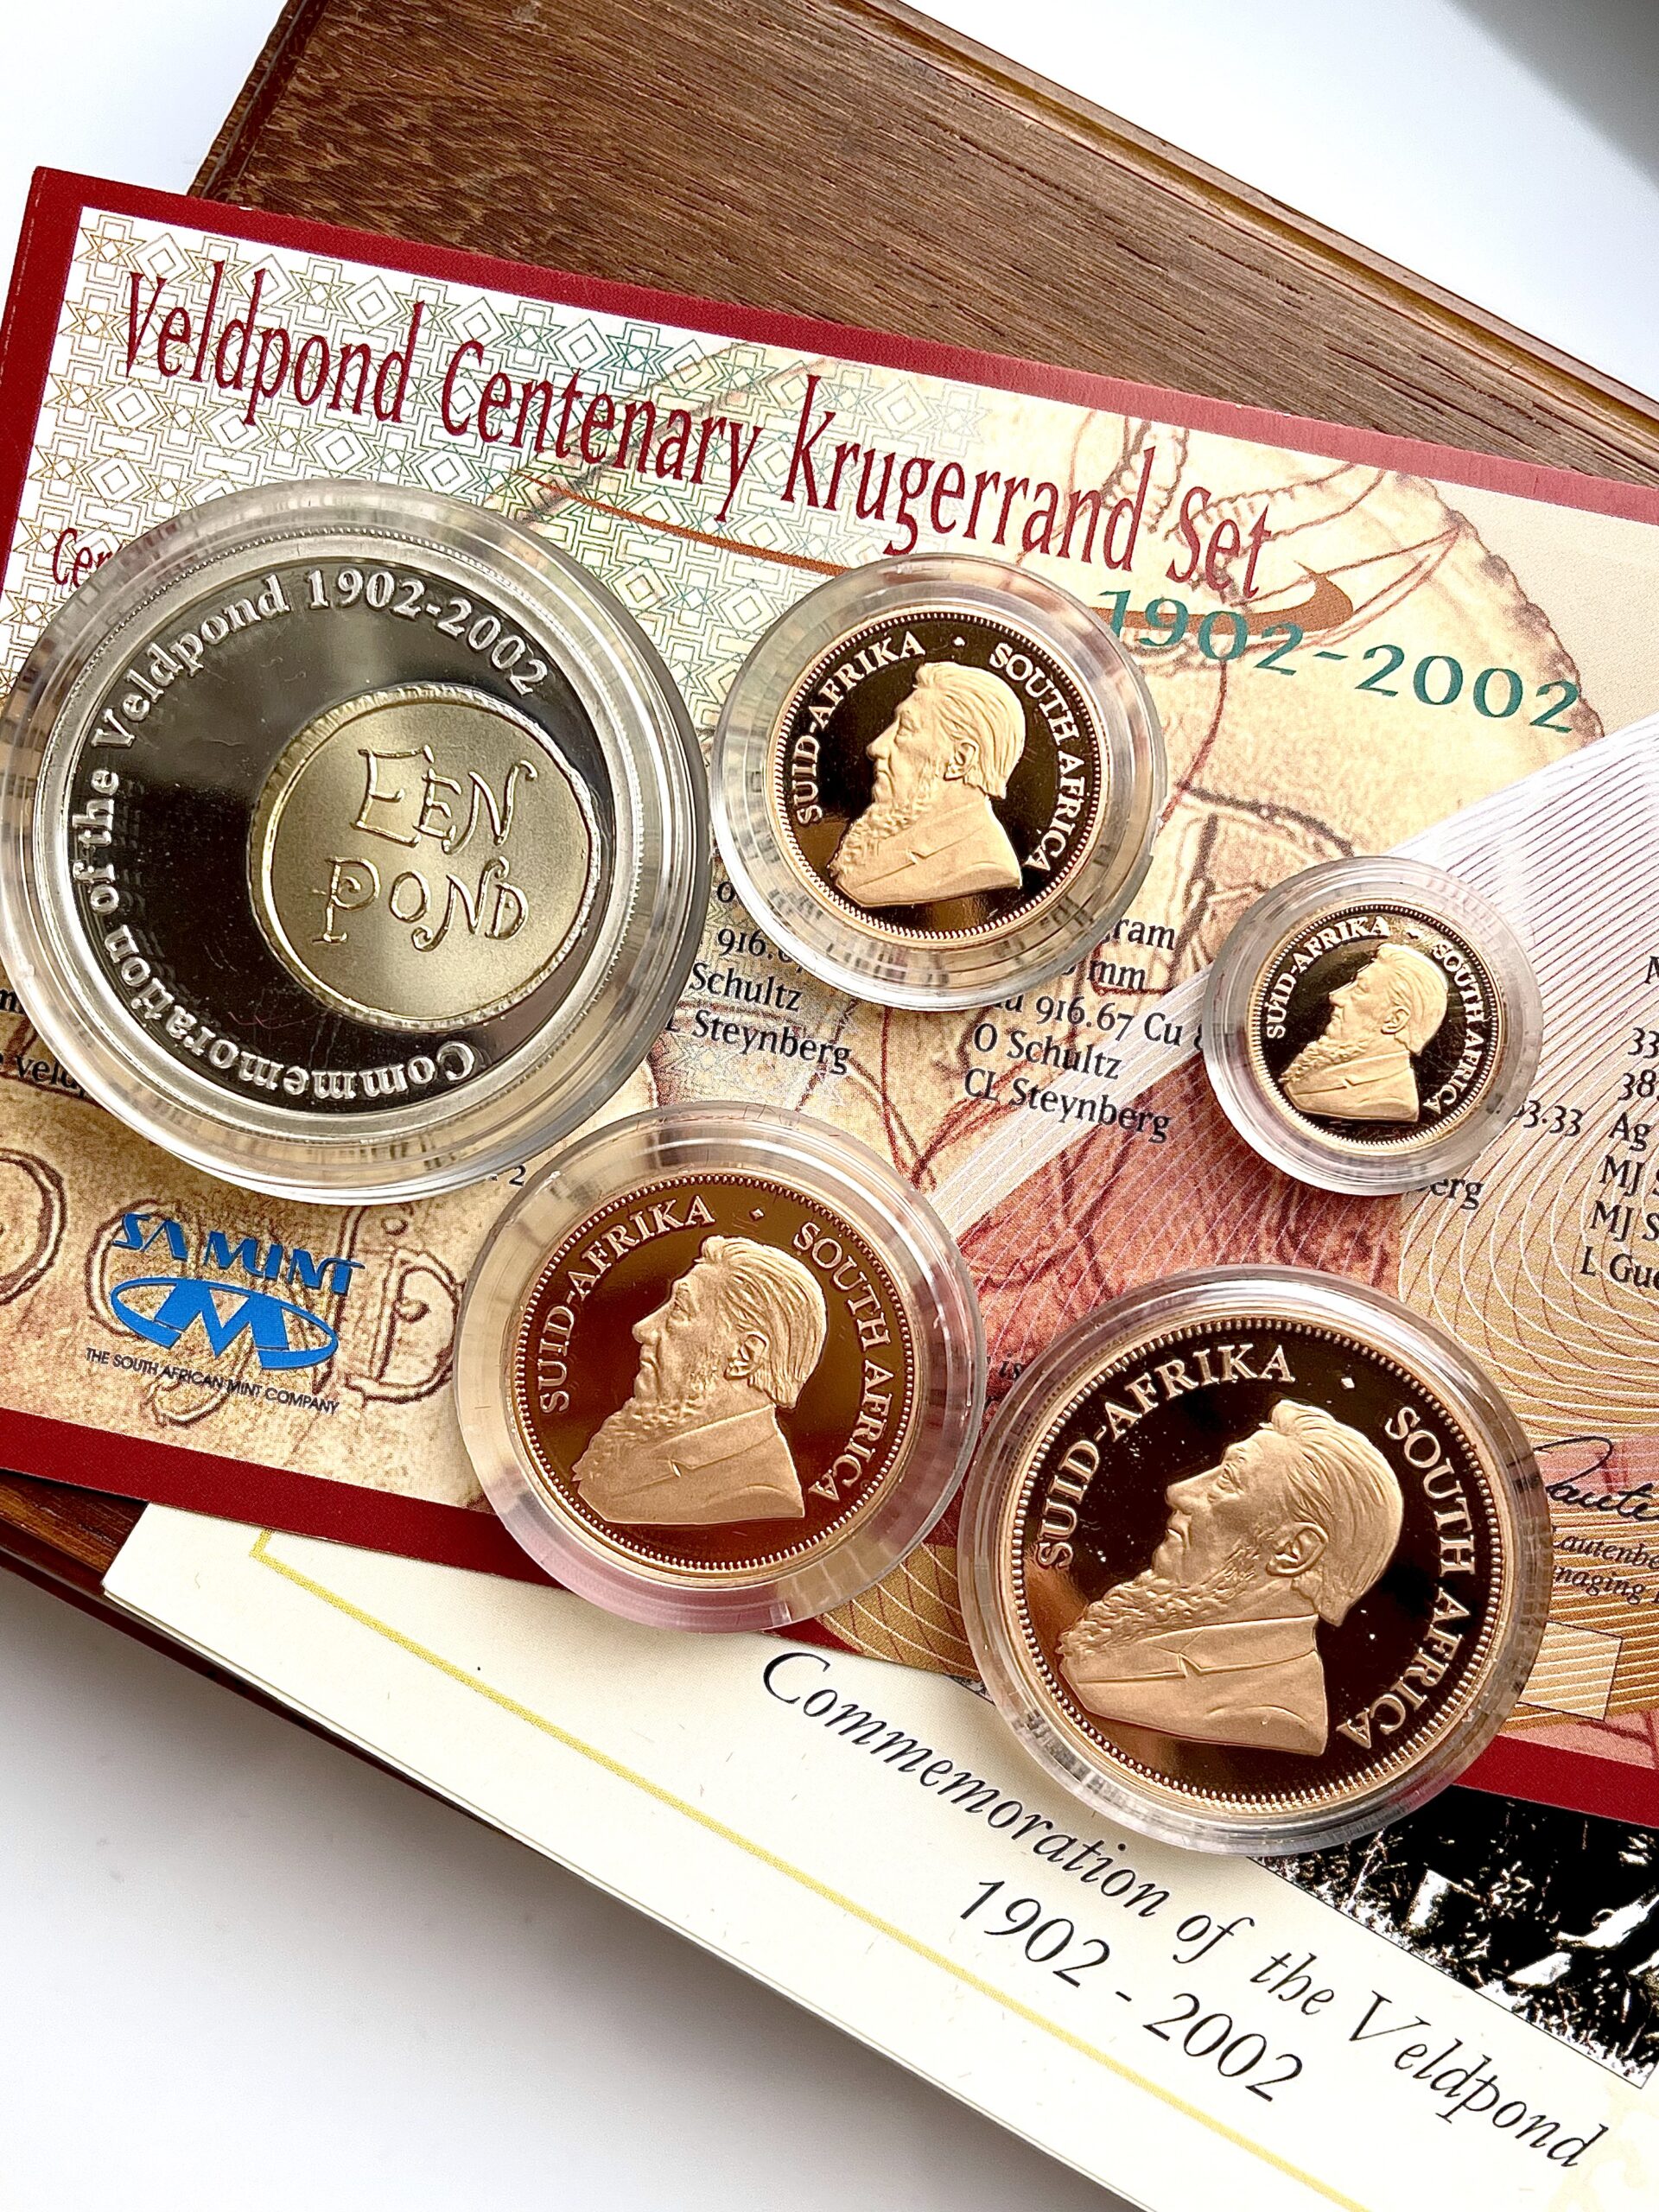 Kruegerrand 2002 Conjunto del centenario de Veldpond